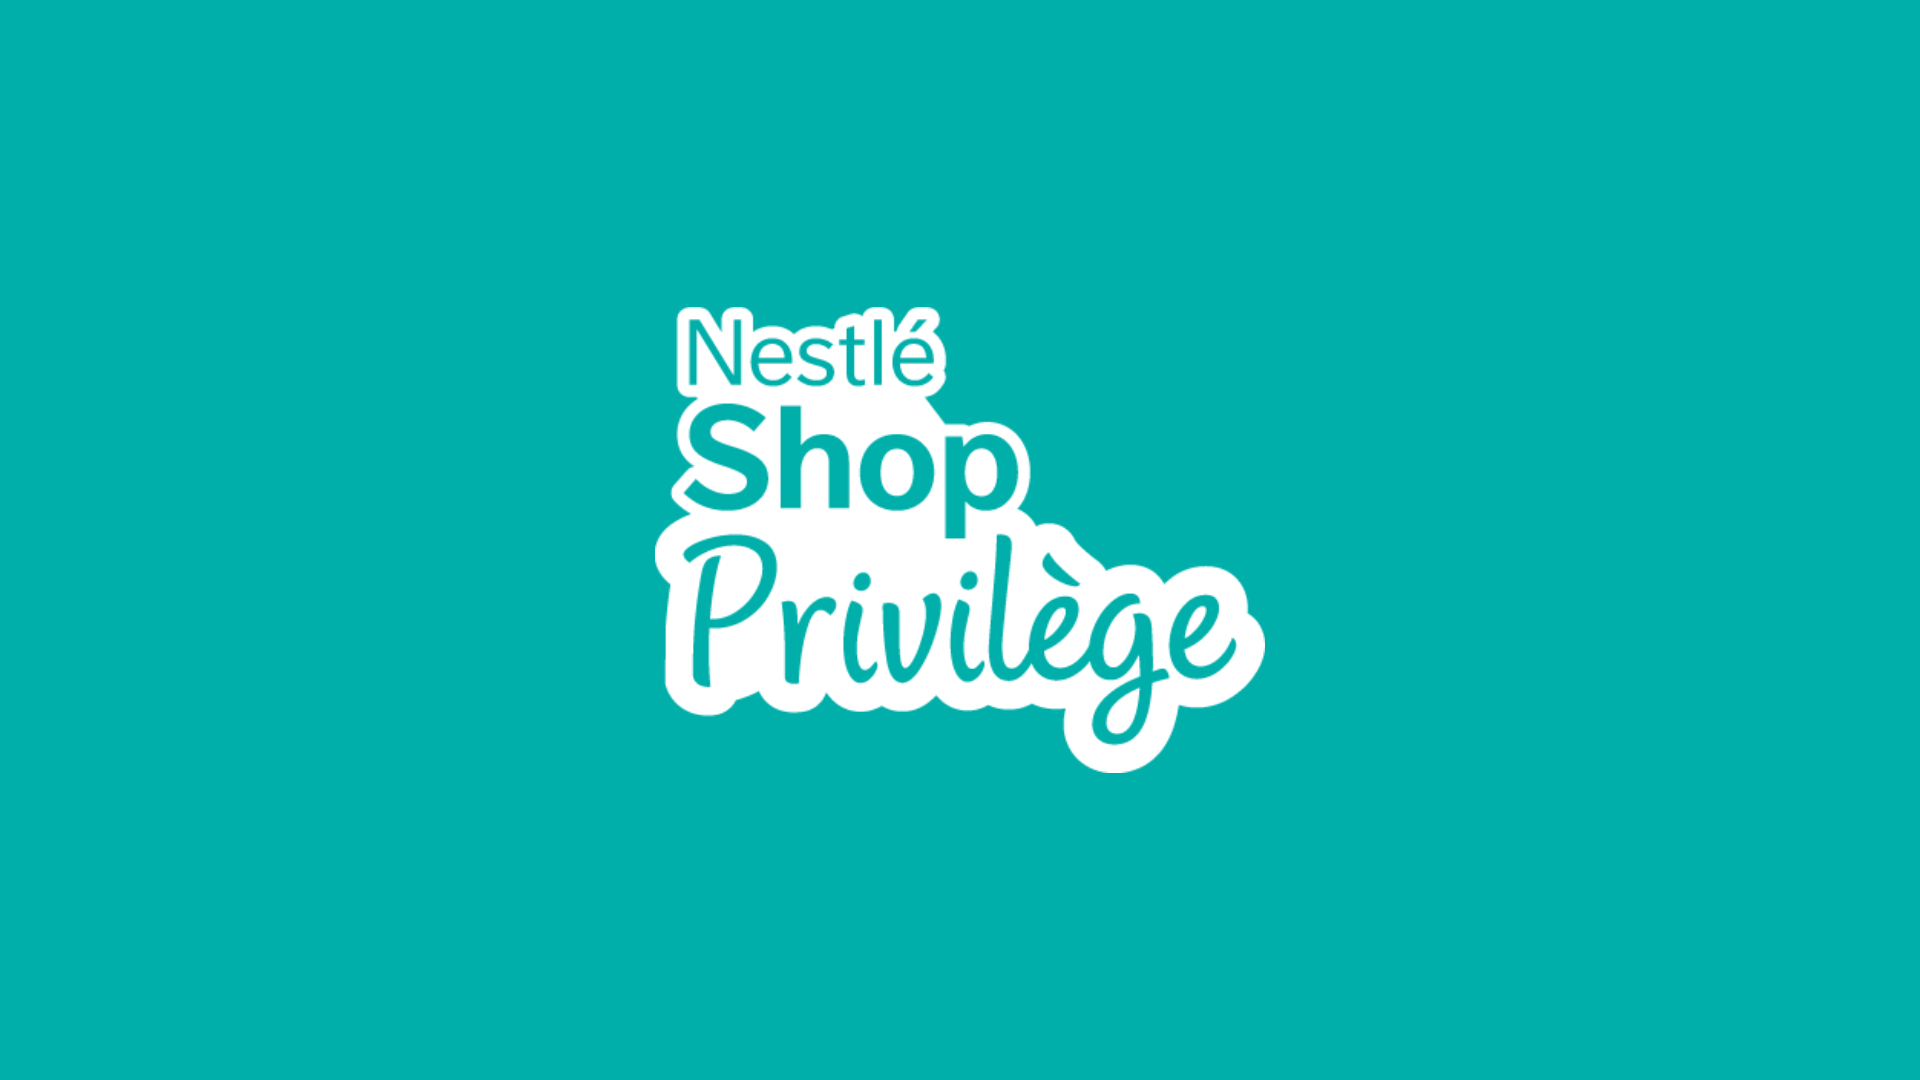 Nestlé Shop Privilège